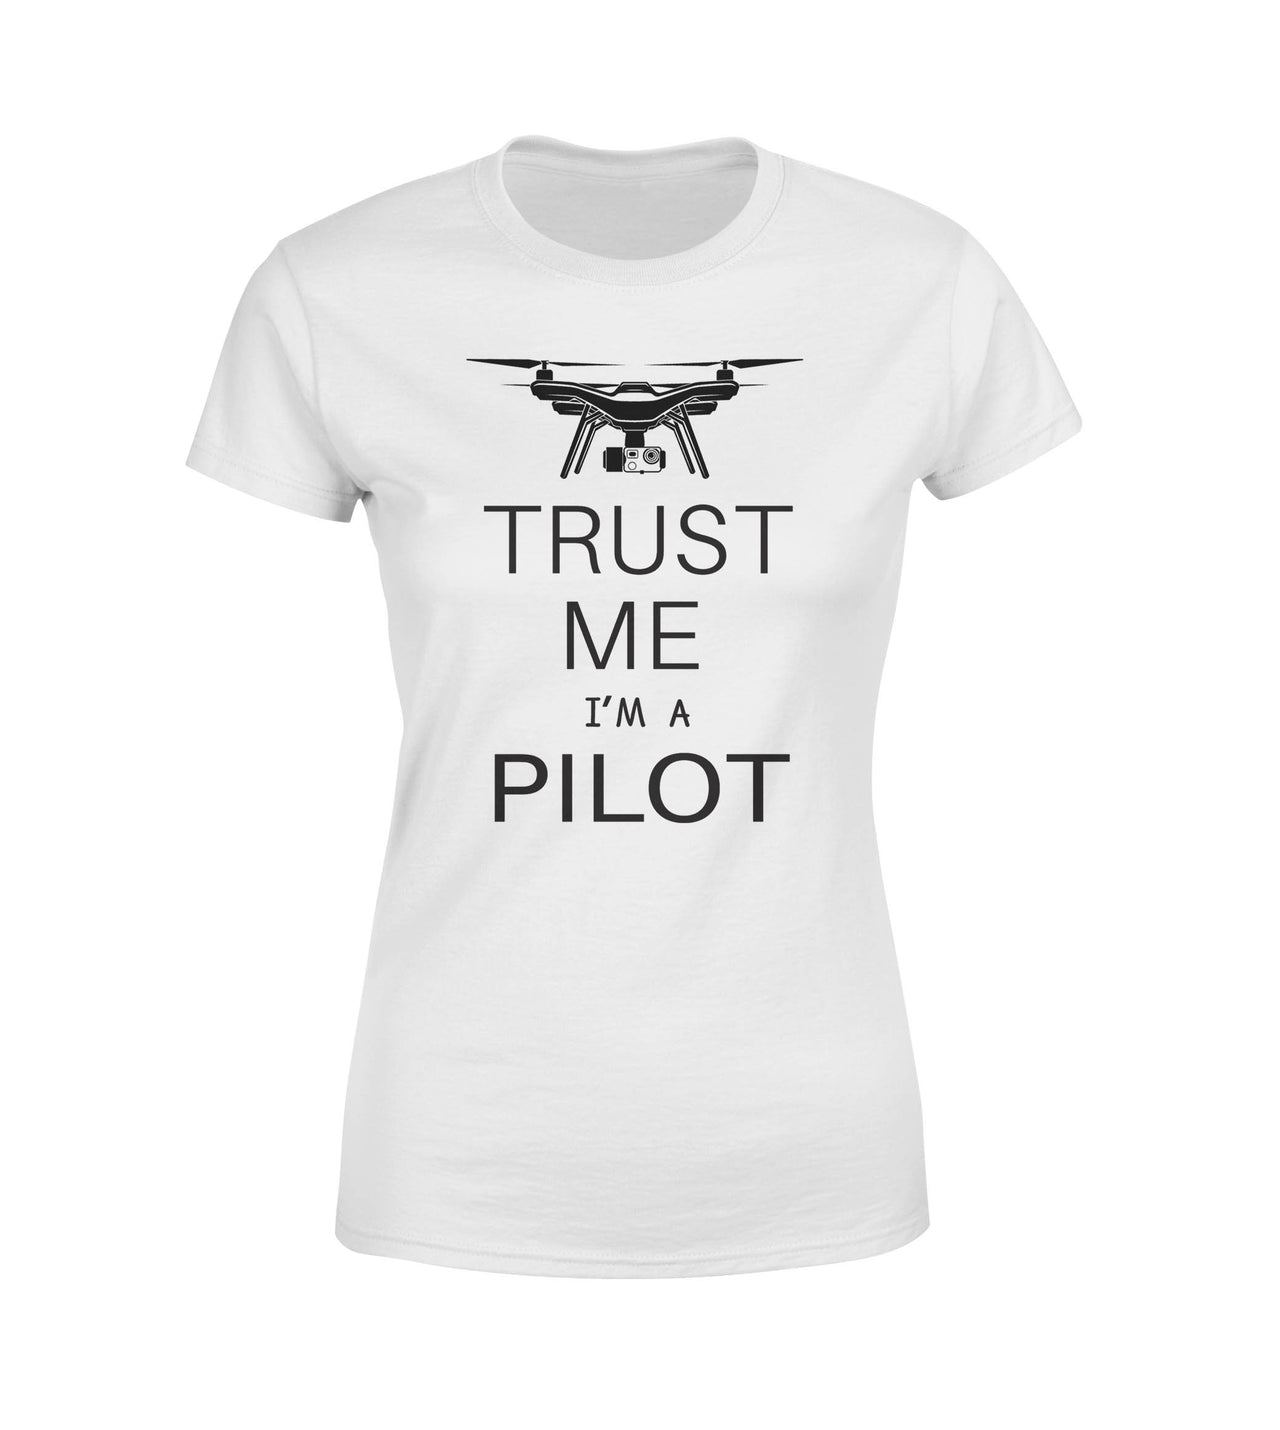 Trust Me I'm a Pilot (Drone) Designed Women T-Shirts